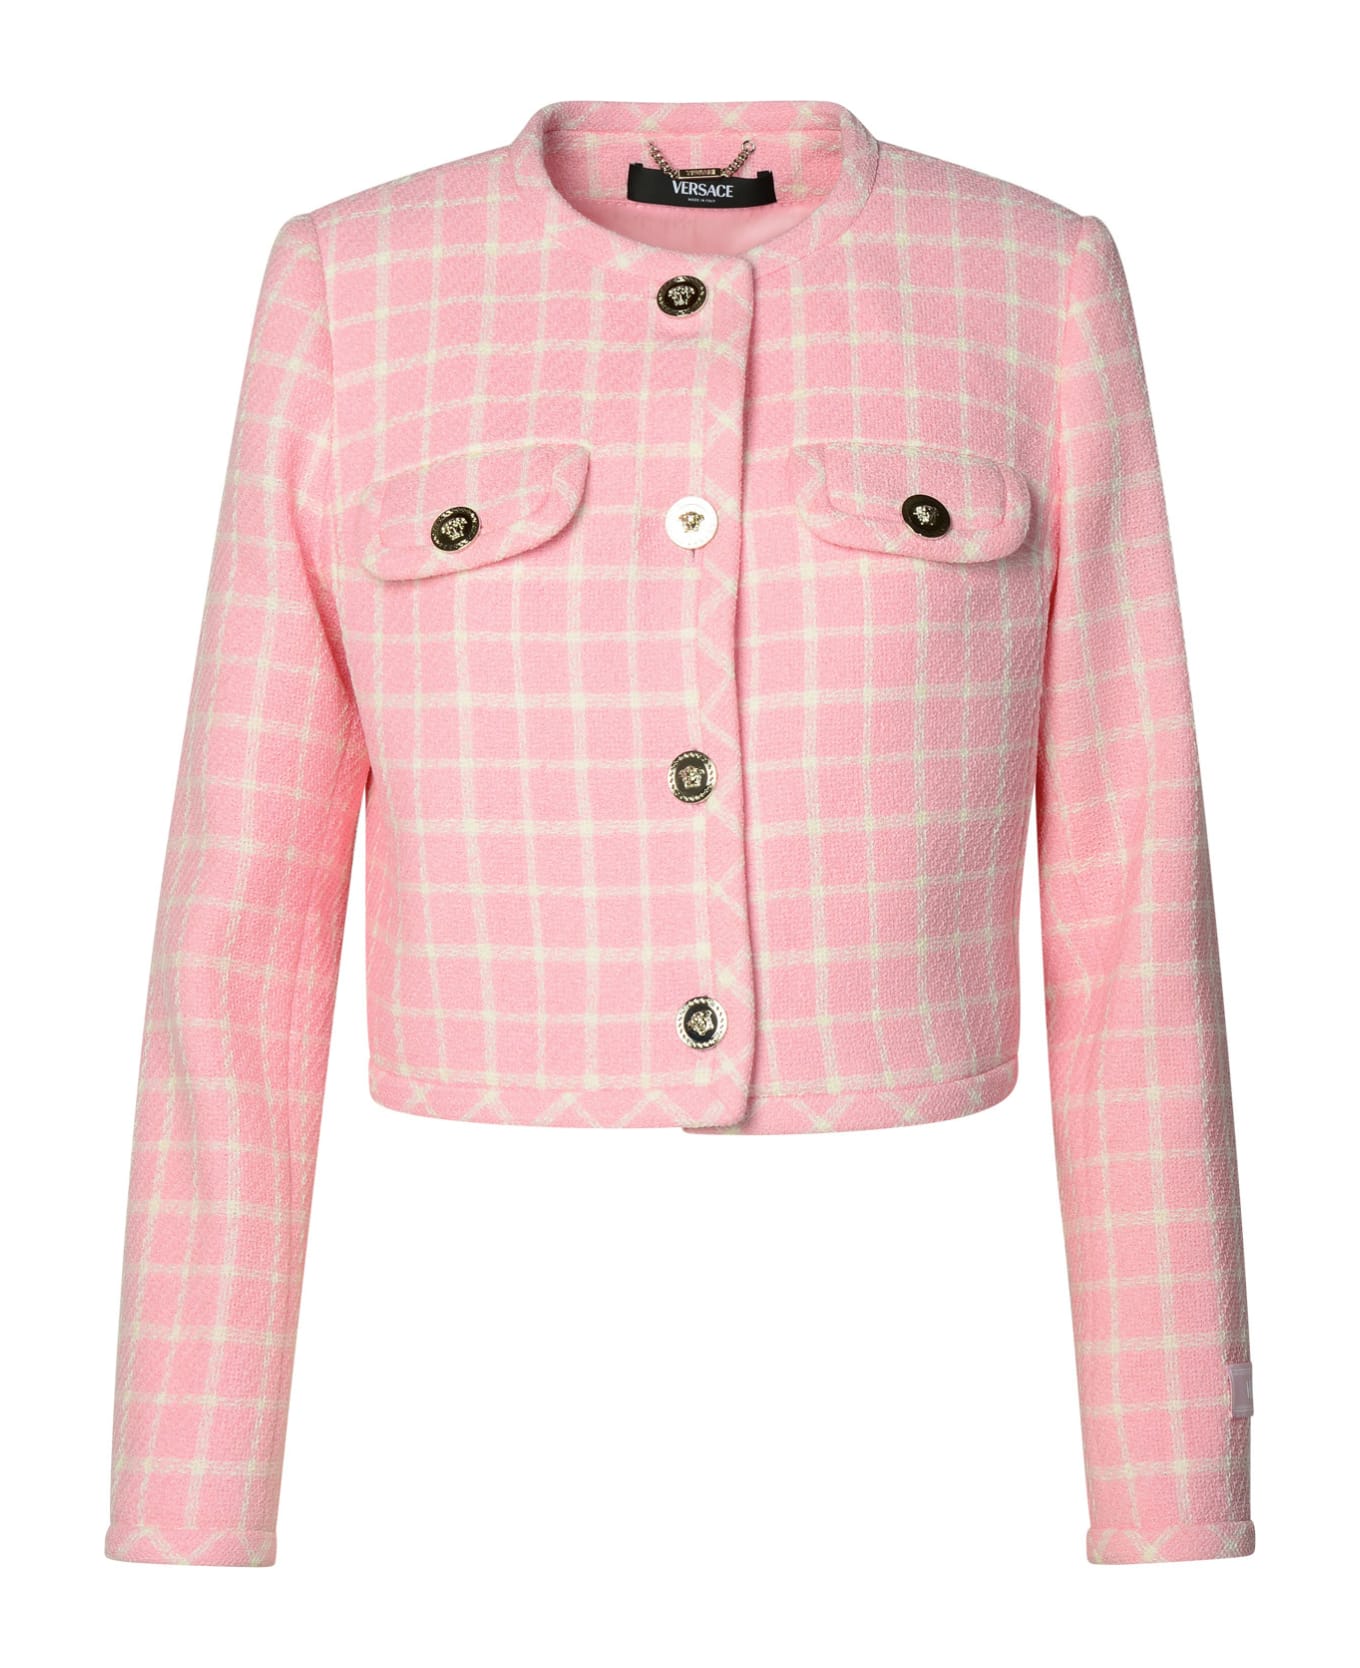 Versace Virgin Wool Blend Jacket - Pastel pink + white